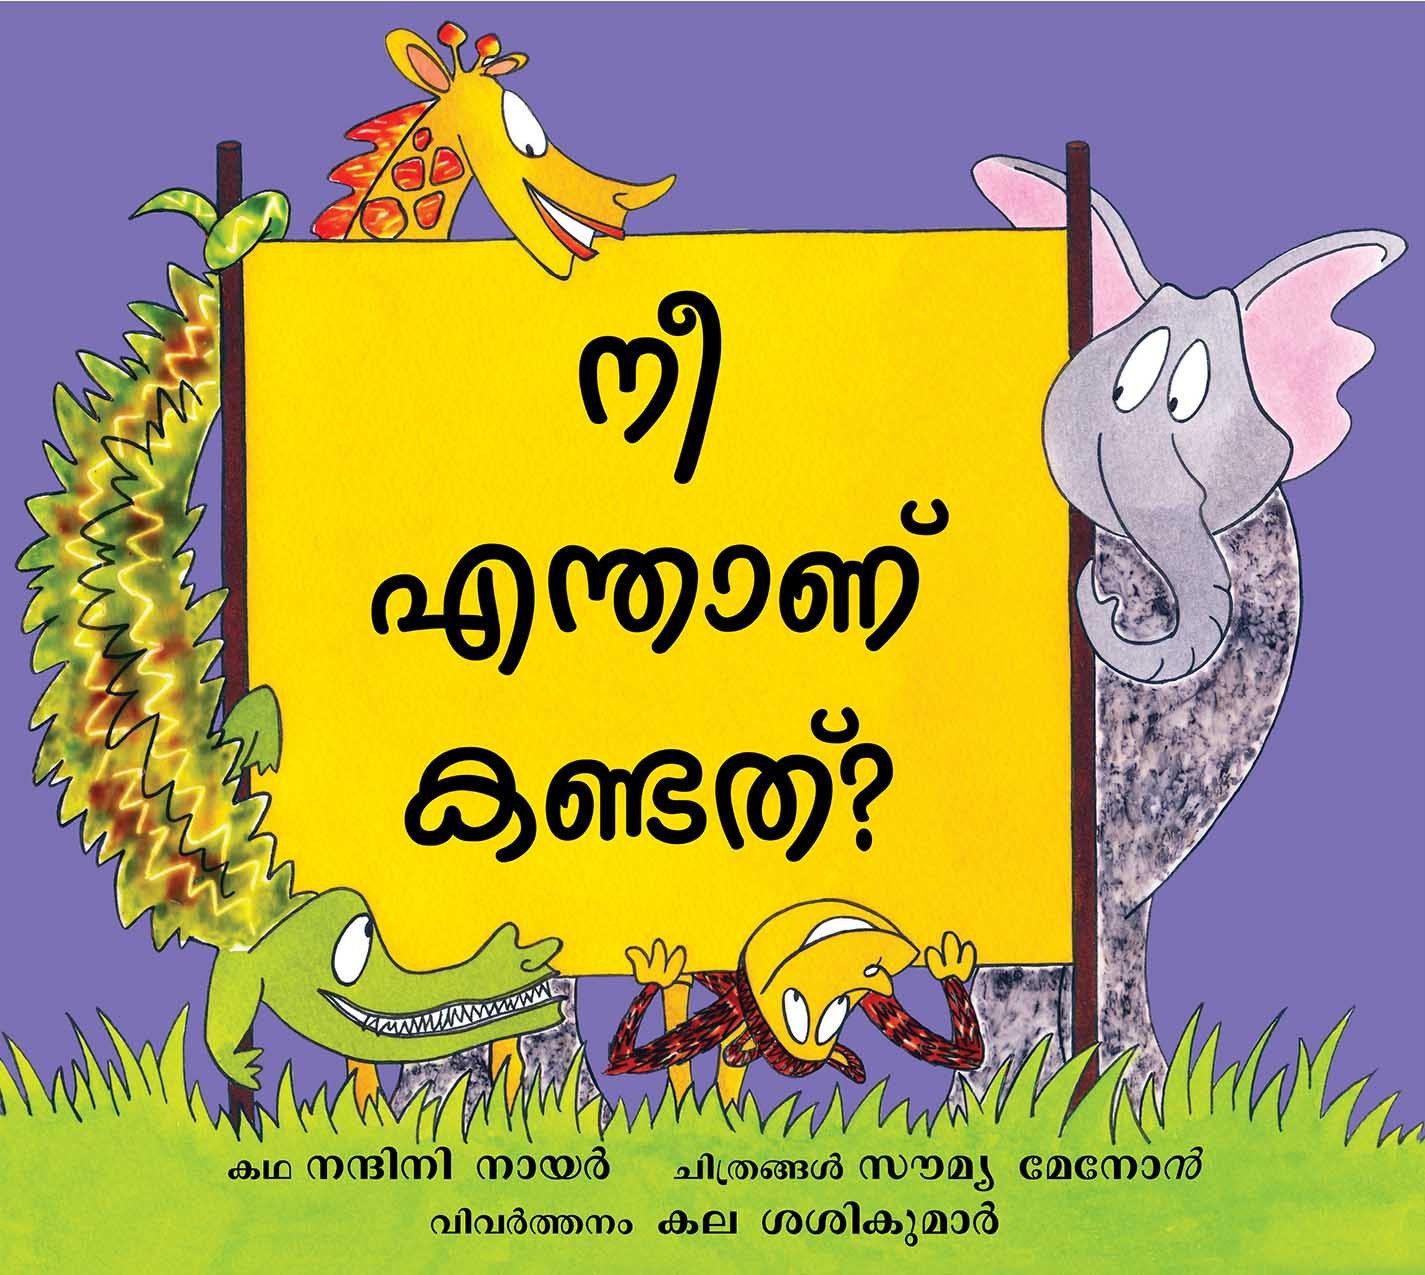 What Did You See?/Nee Endaanu Kandadu (Malayalam)